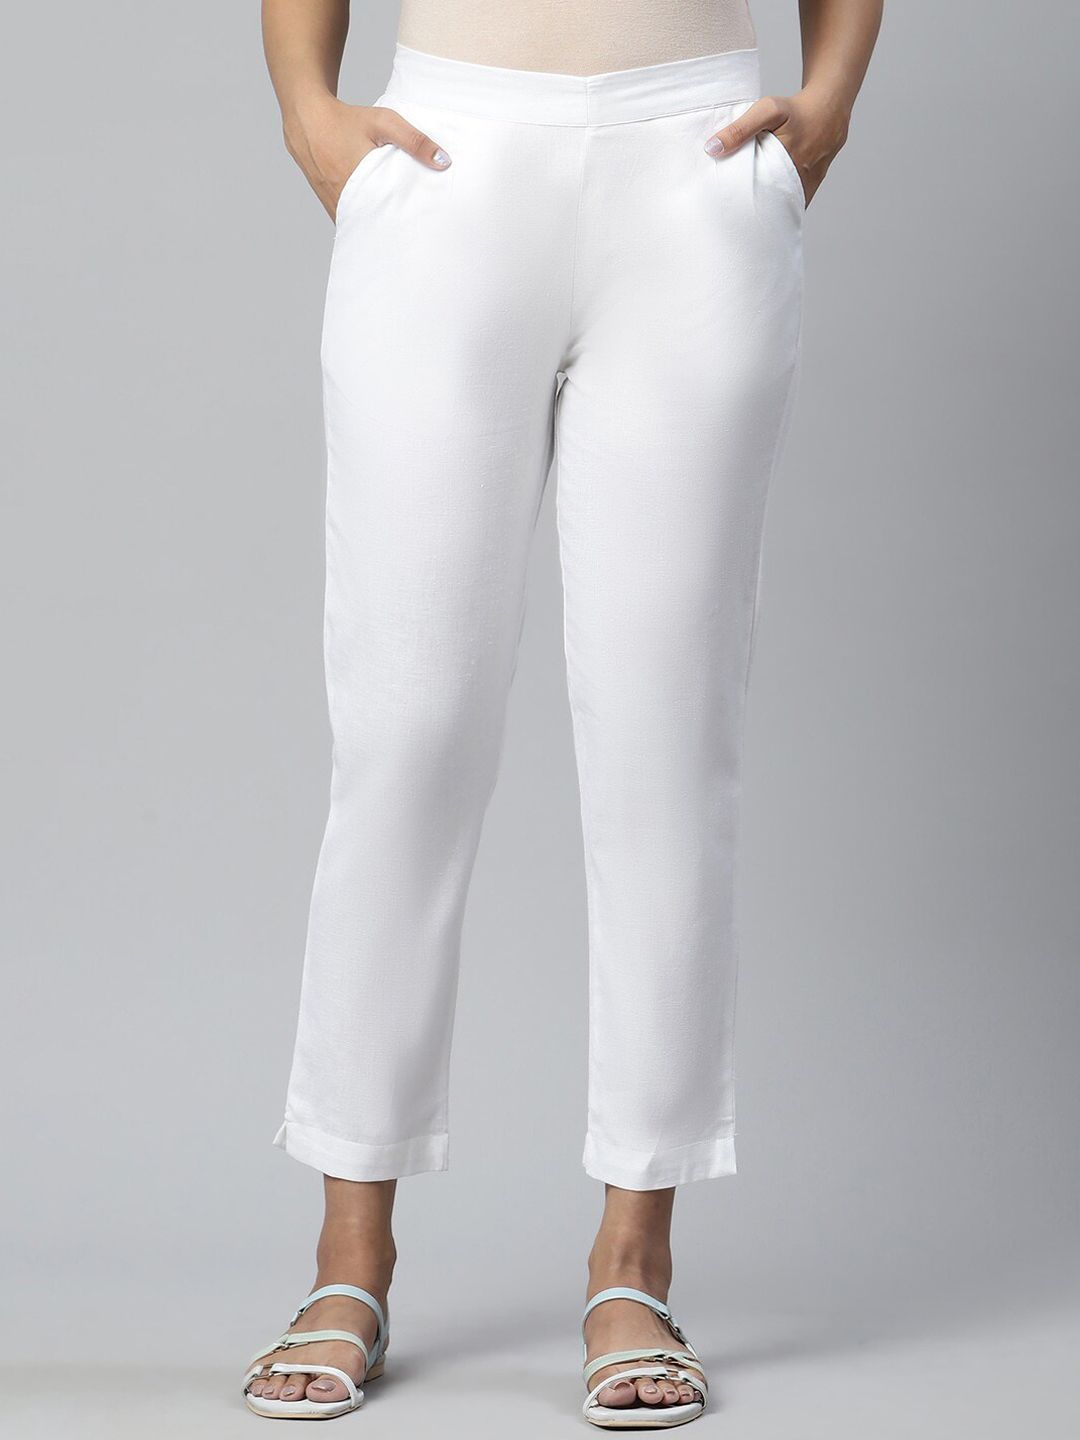 AURELIA Women White Trousers Price in India